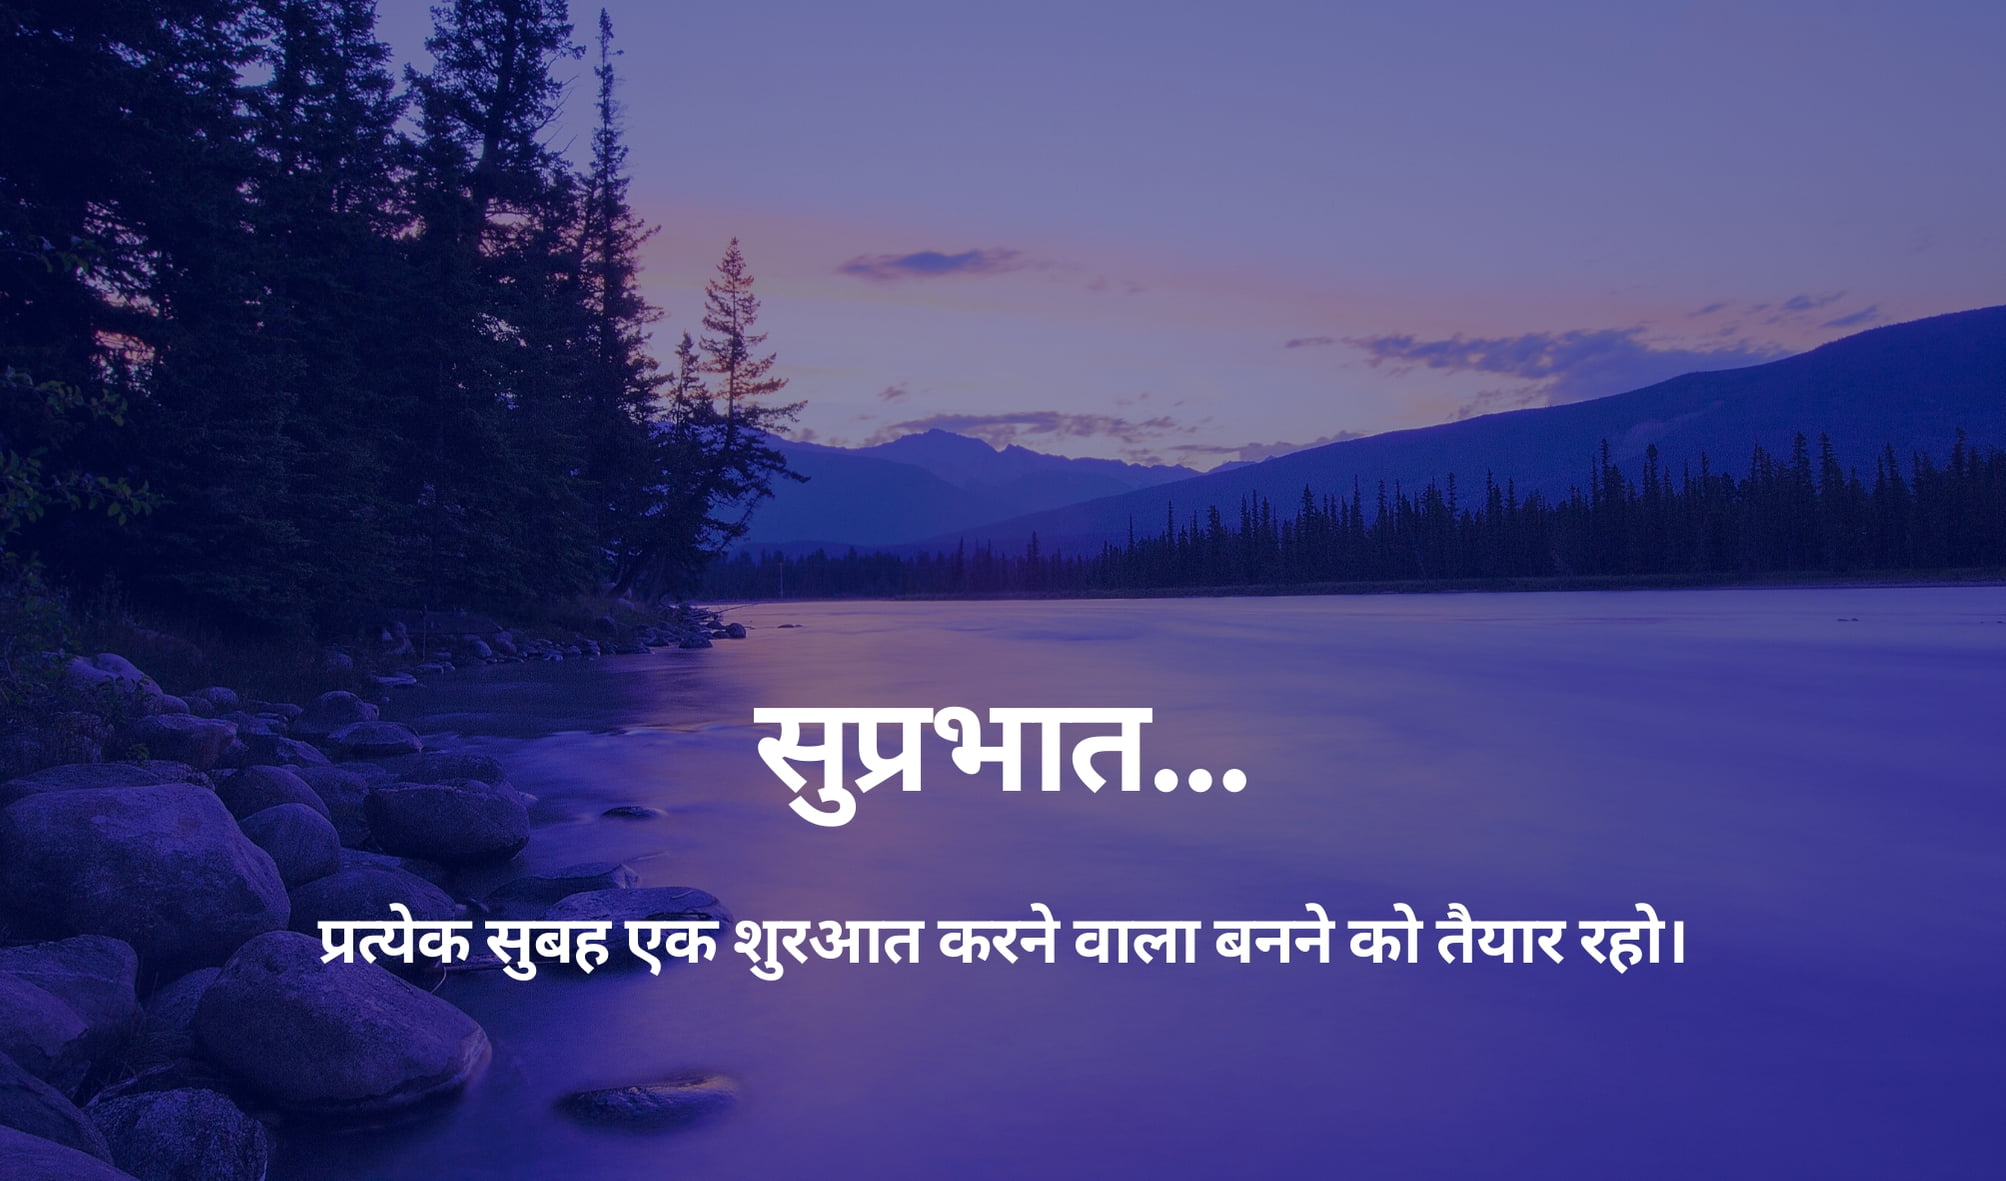 Good Morning Images In Hindi Hd